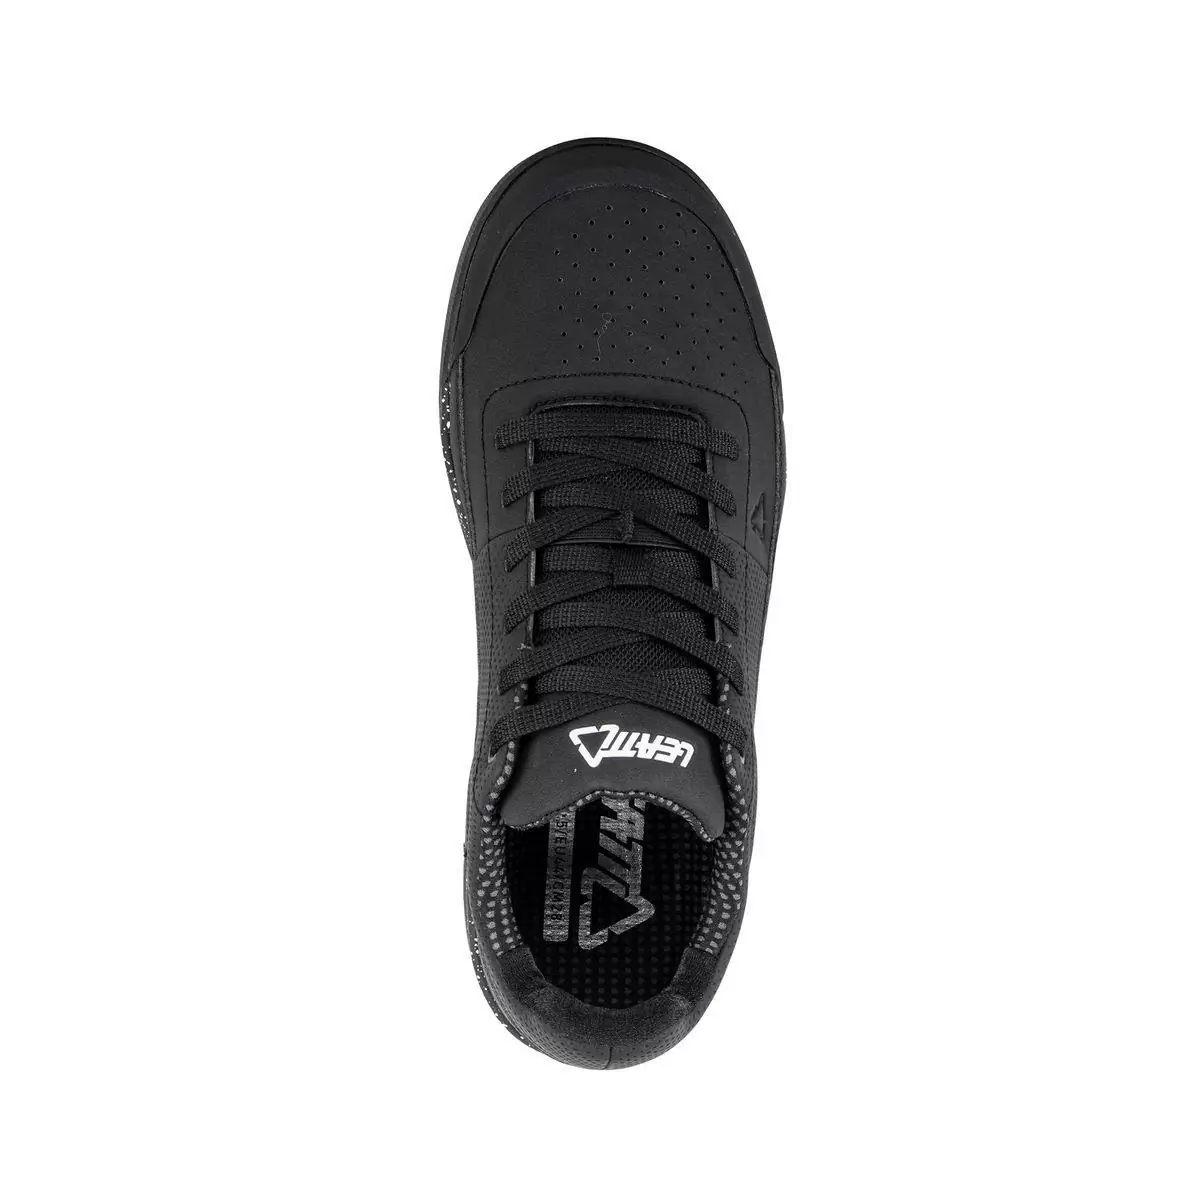 Mtb Shoes 2.0 Flat Black Size 40 #2